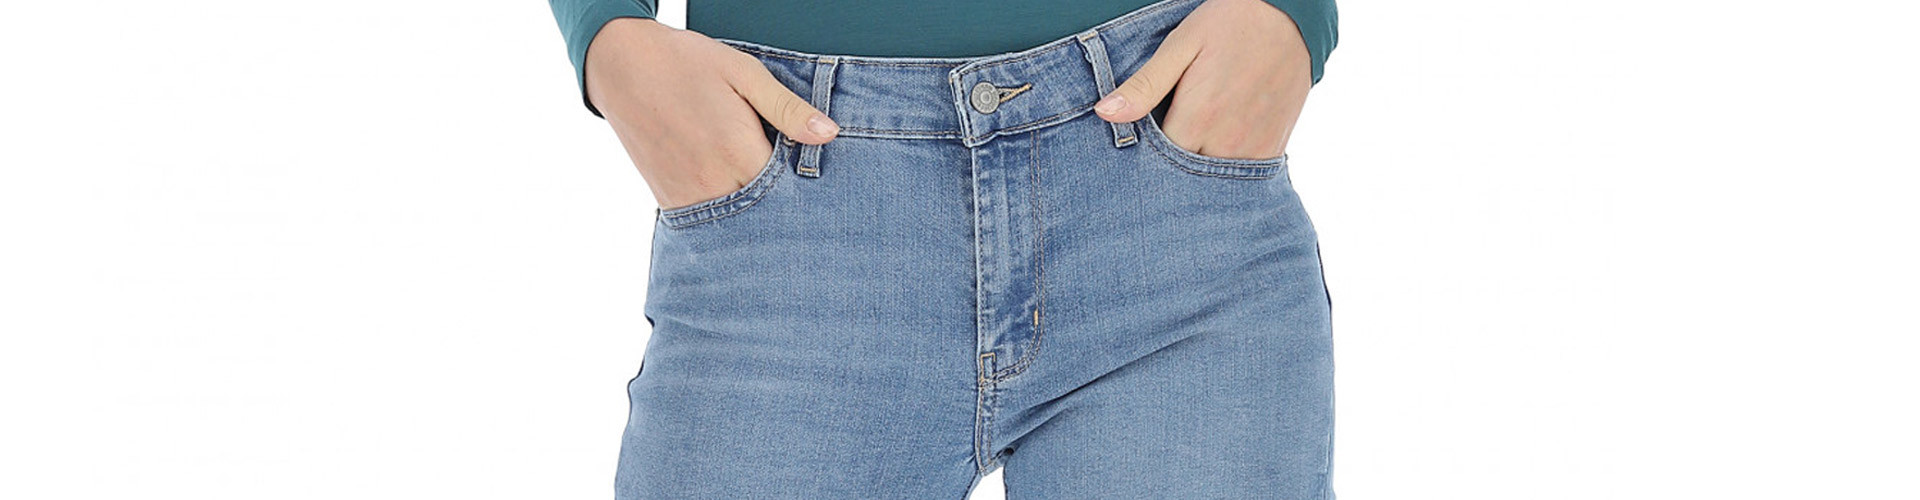 jeans-donna-slim.jpg